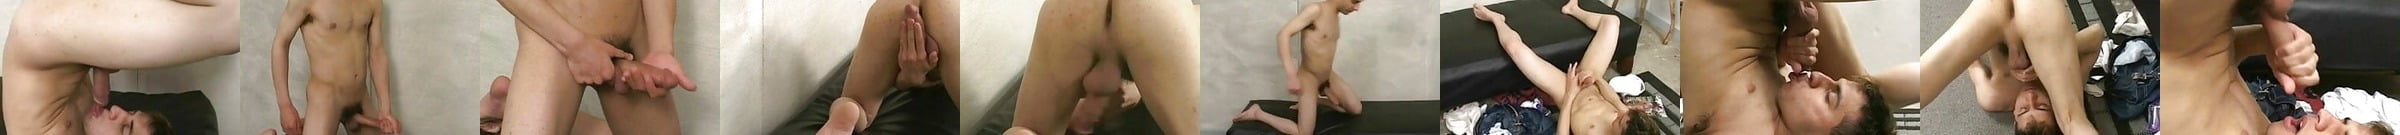 Spa Studs Resort Clients Massage Naked Male Attendants Xhamster